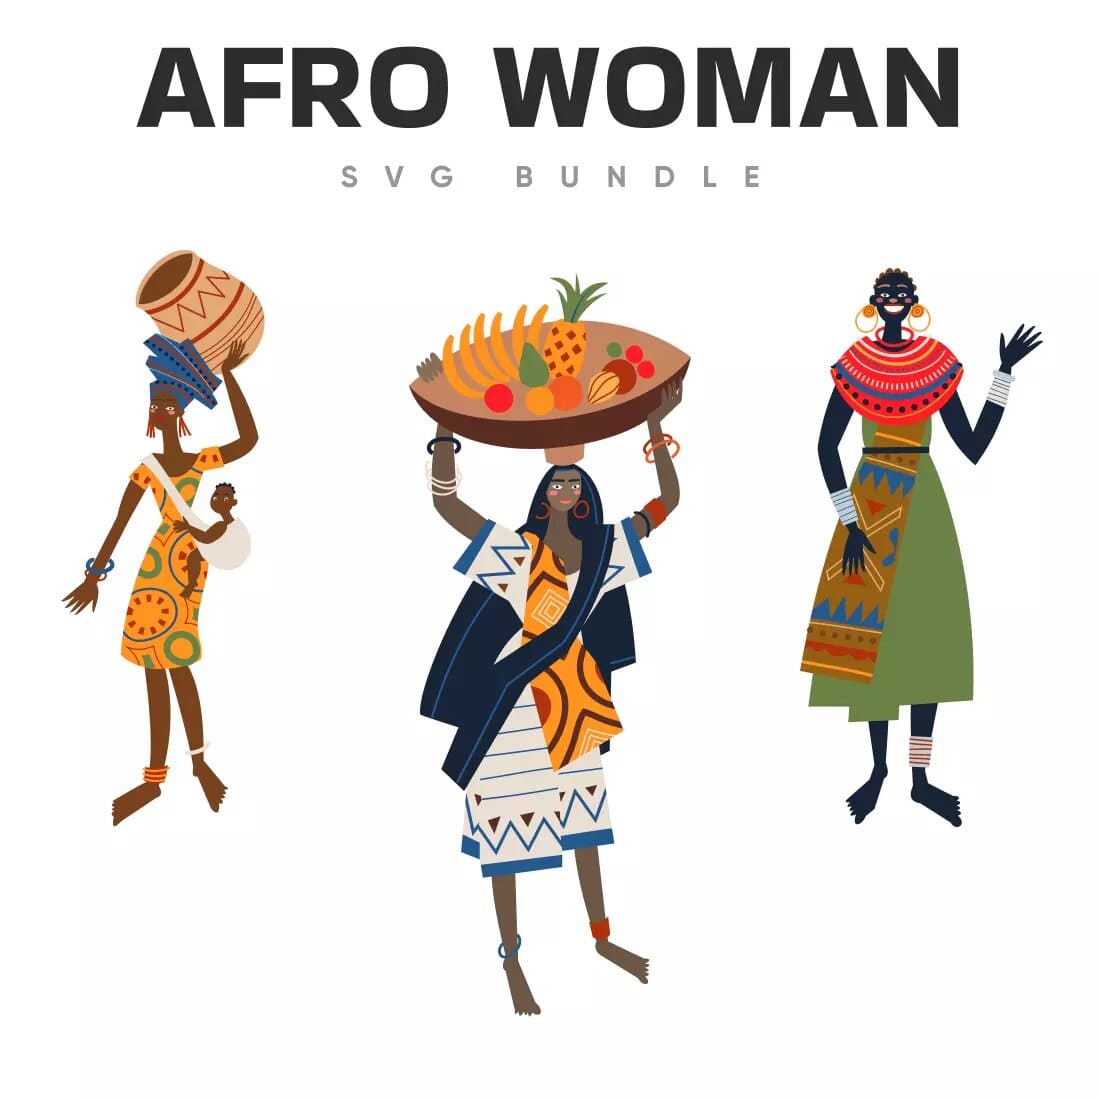 Afro Woman SVG Bundle Preview 5.